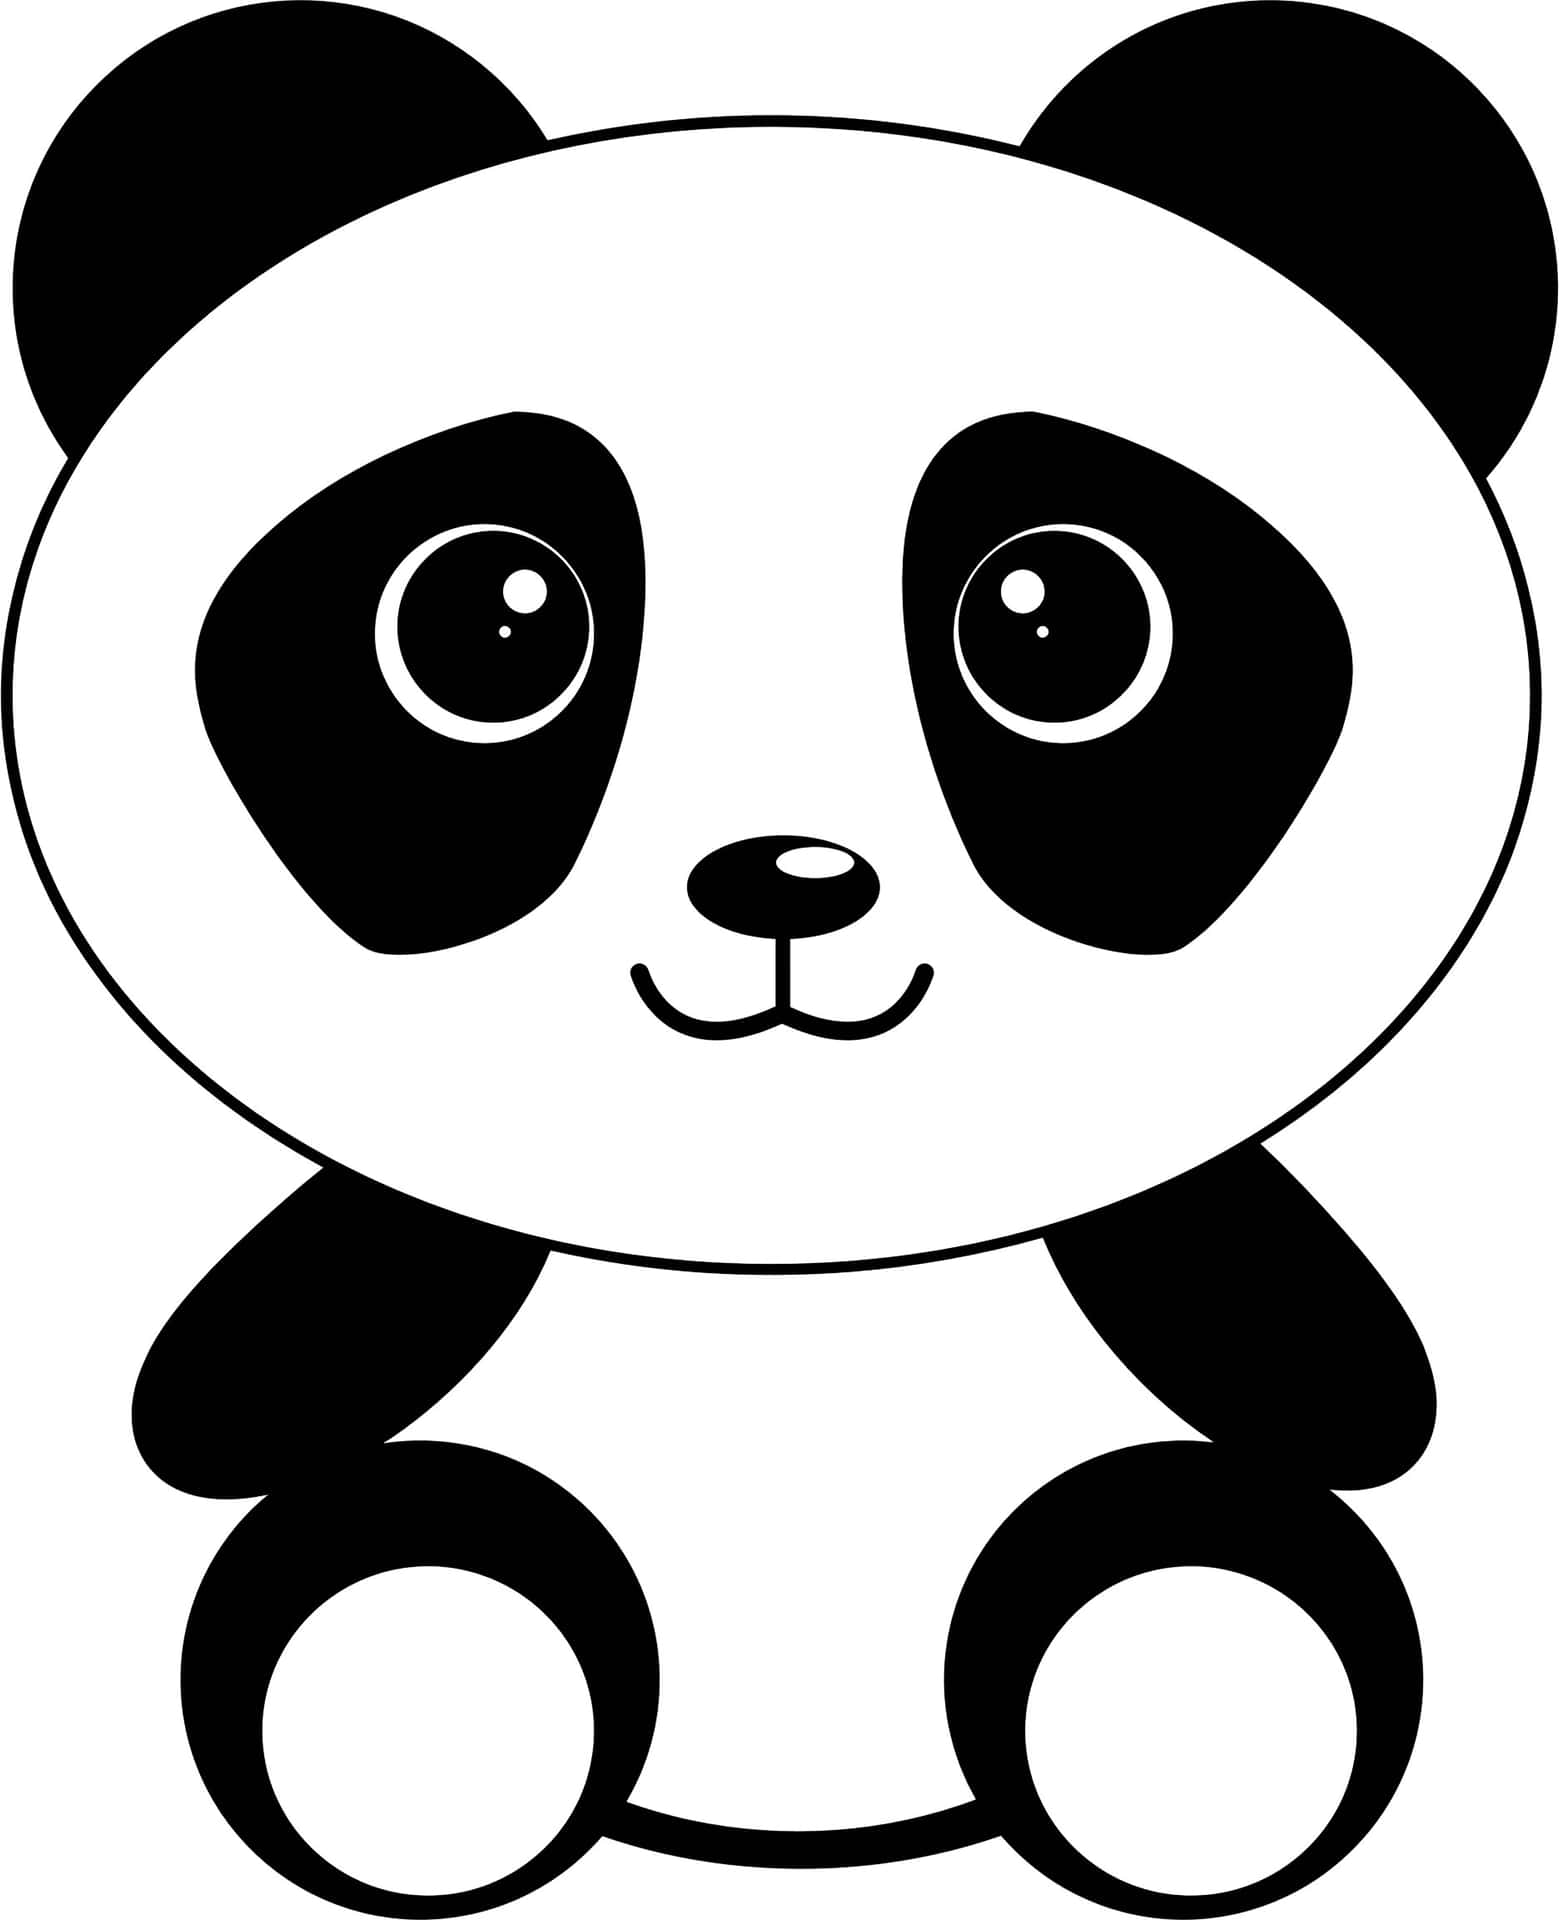 Plain Black White Cute Cartoon Panda Wallpaper